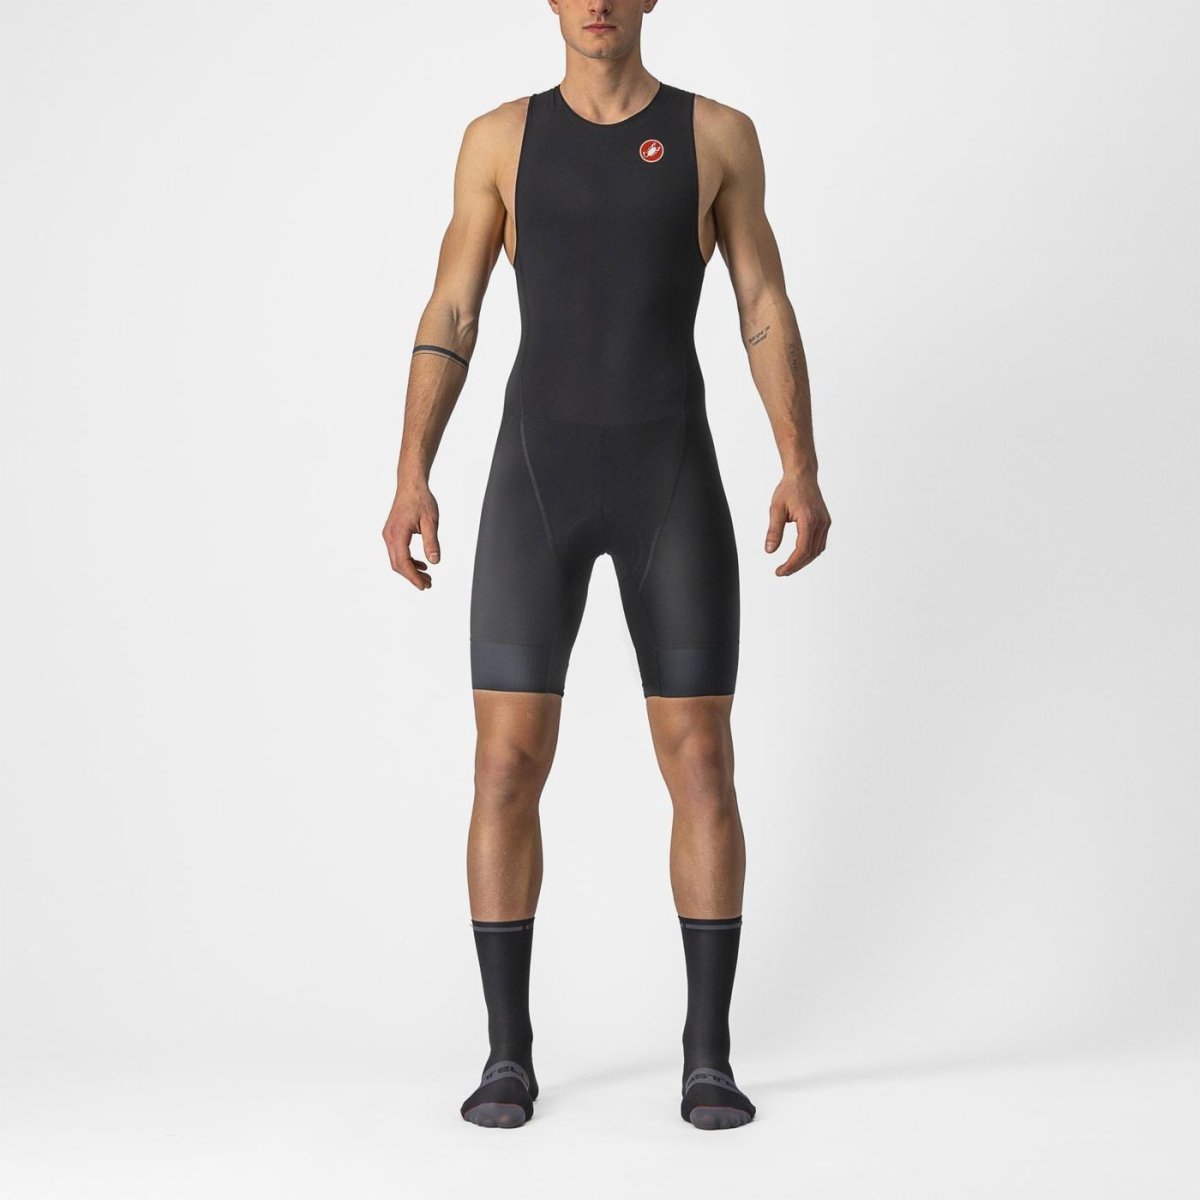 NeoPro Noir Triathlon Suit